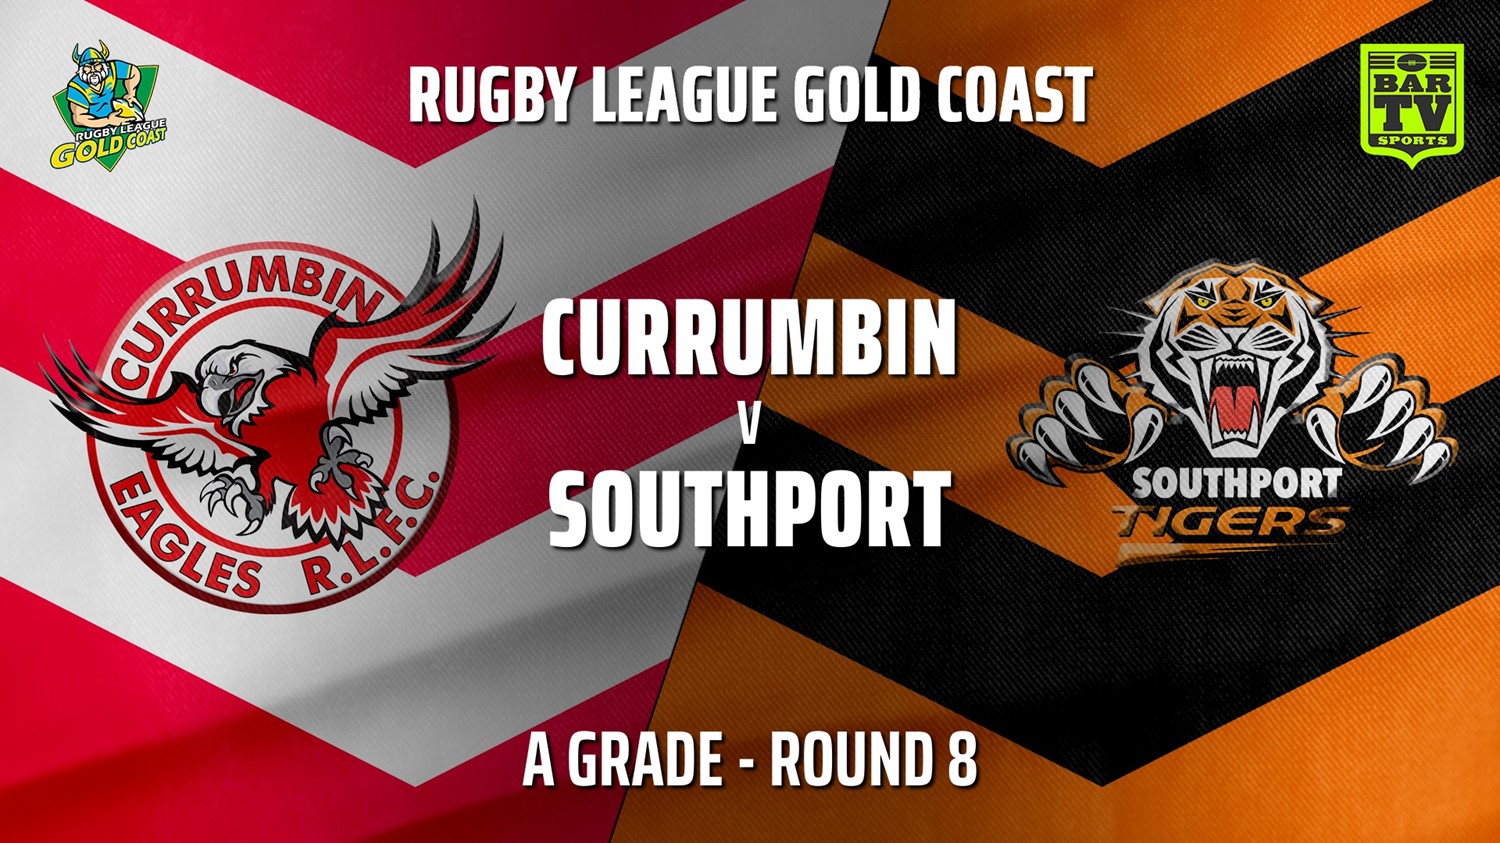 210725-Gold Coast Round 8 - A Grade - Currumbin Eagles v Southport Tigers Minigame Slate Image